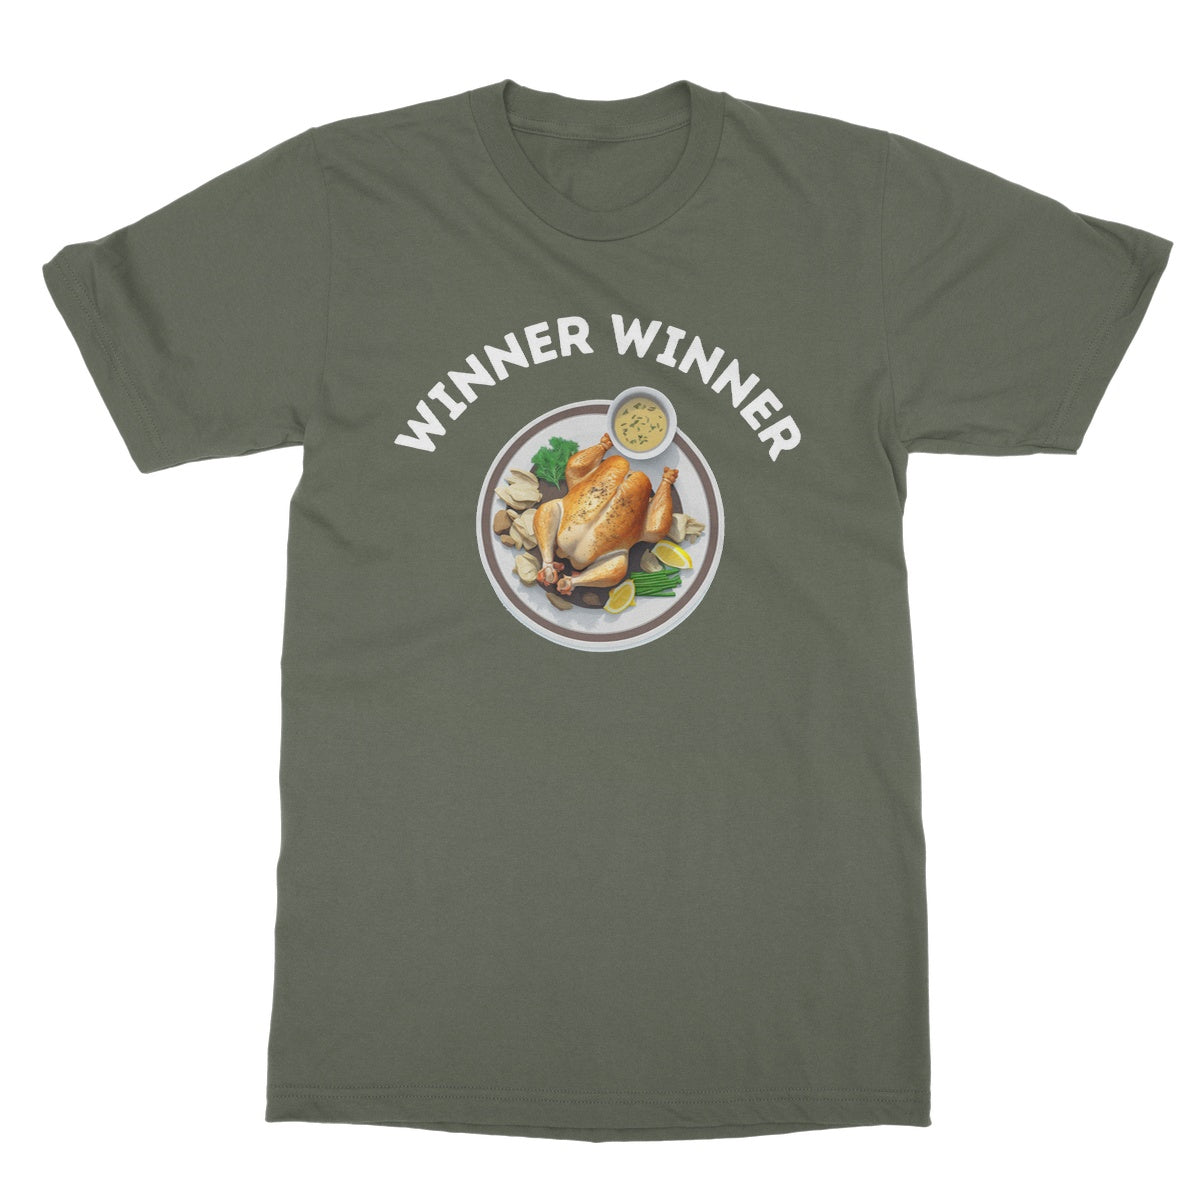 winner winner chicken dinner t shirt green